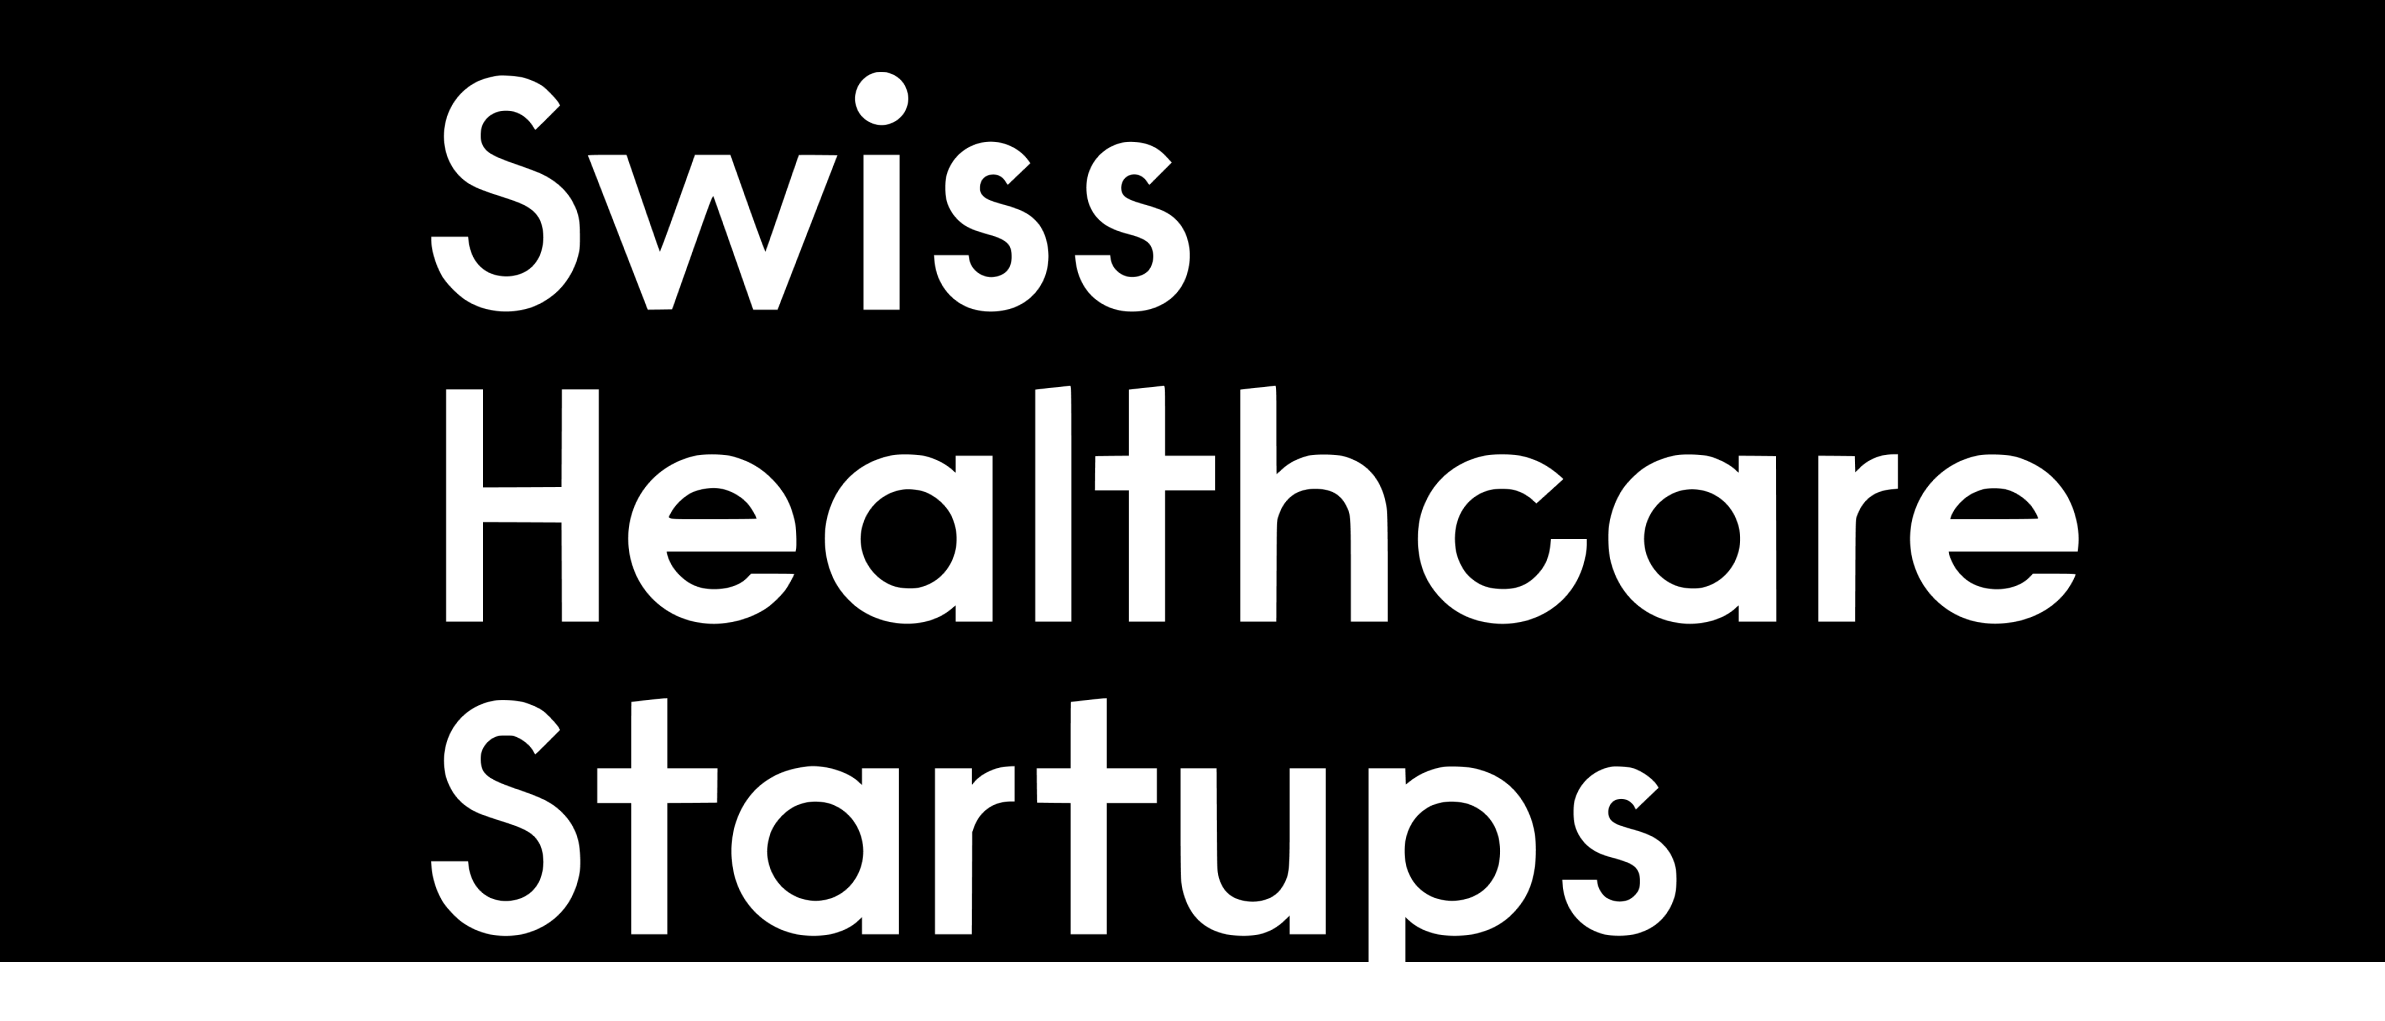 NetworkP Swiss healthcare startups